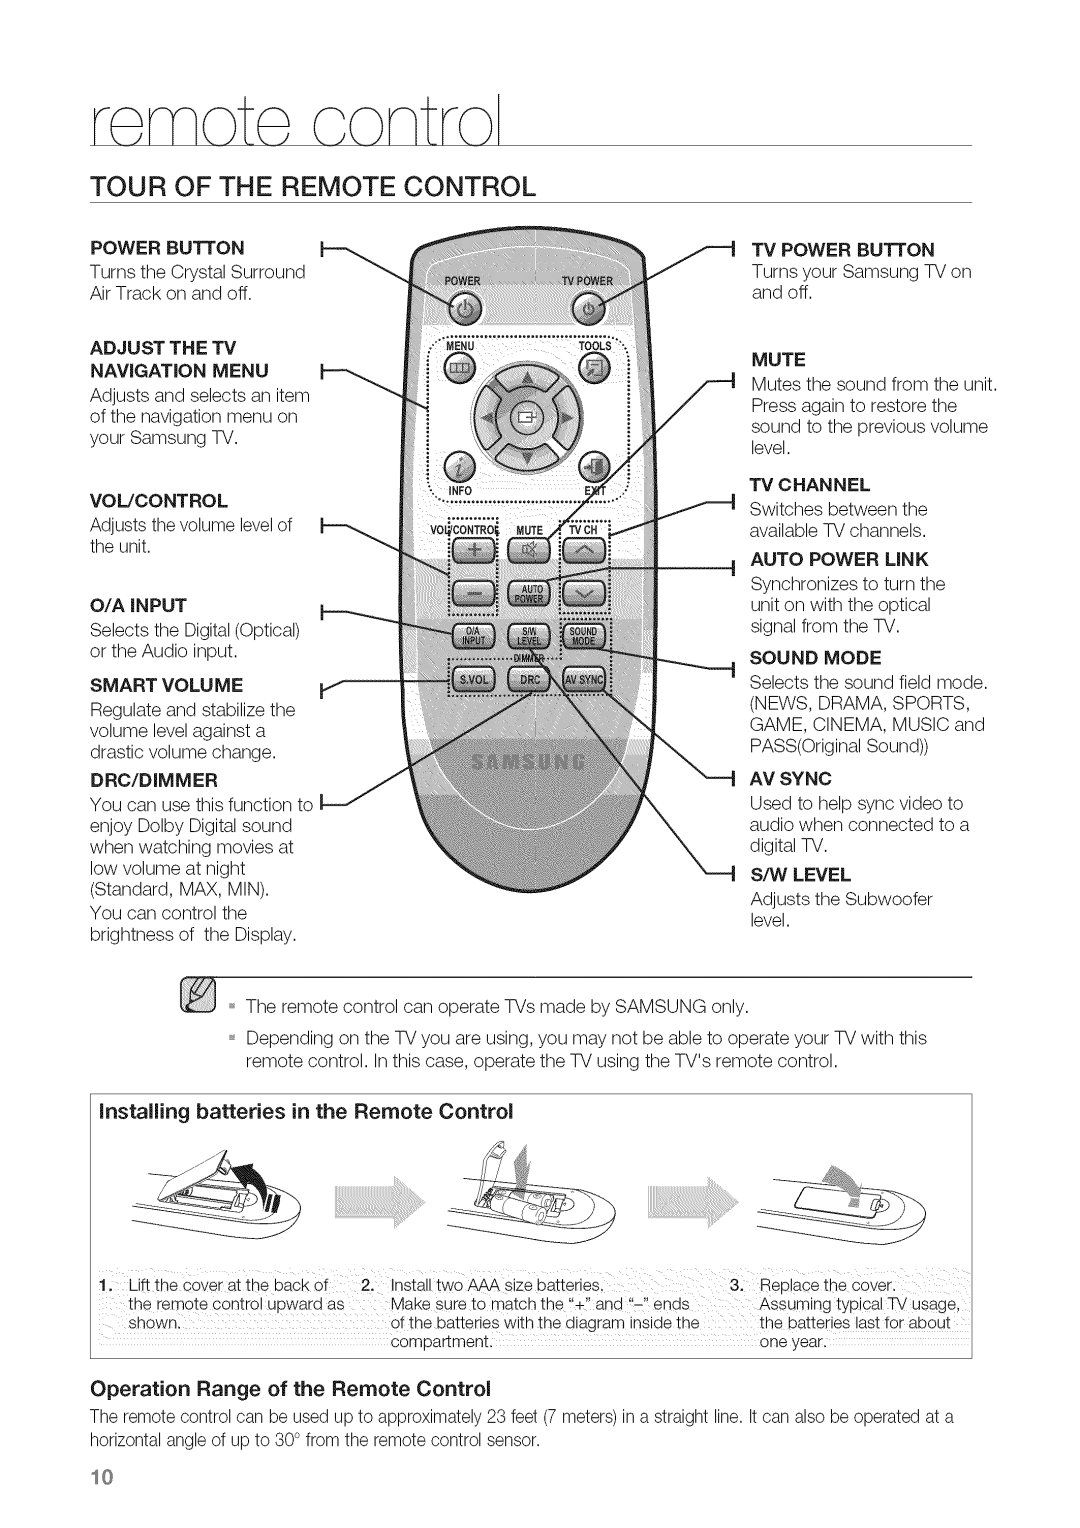 Samsung HW-C450 remote contro, Tour Of The Remote Control, Installing batteries in the Remote Control, Adjust The Tv, Mute 